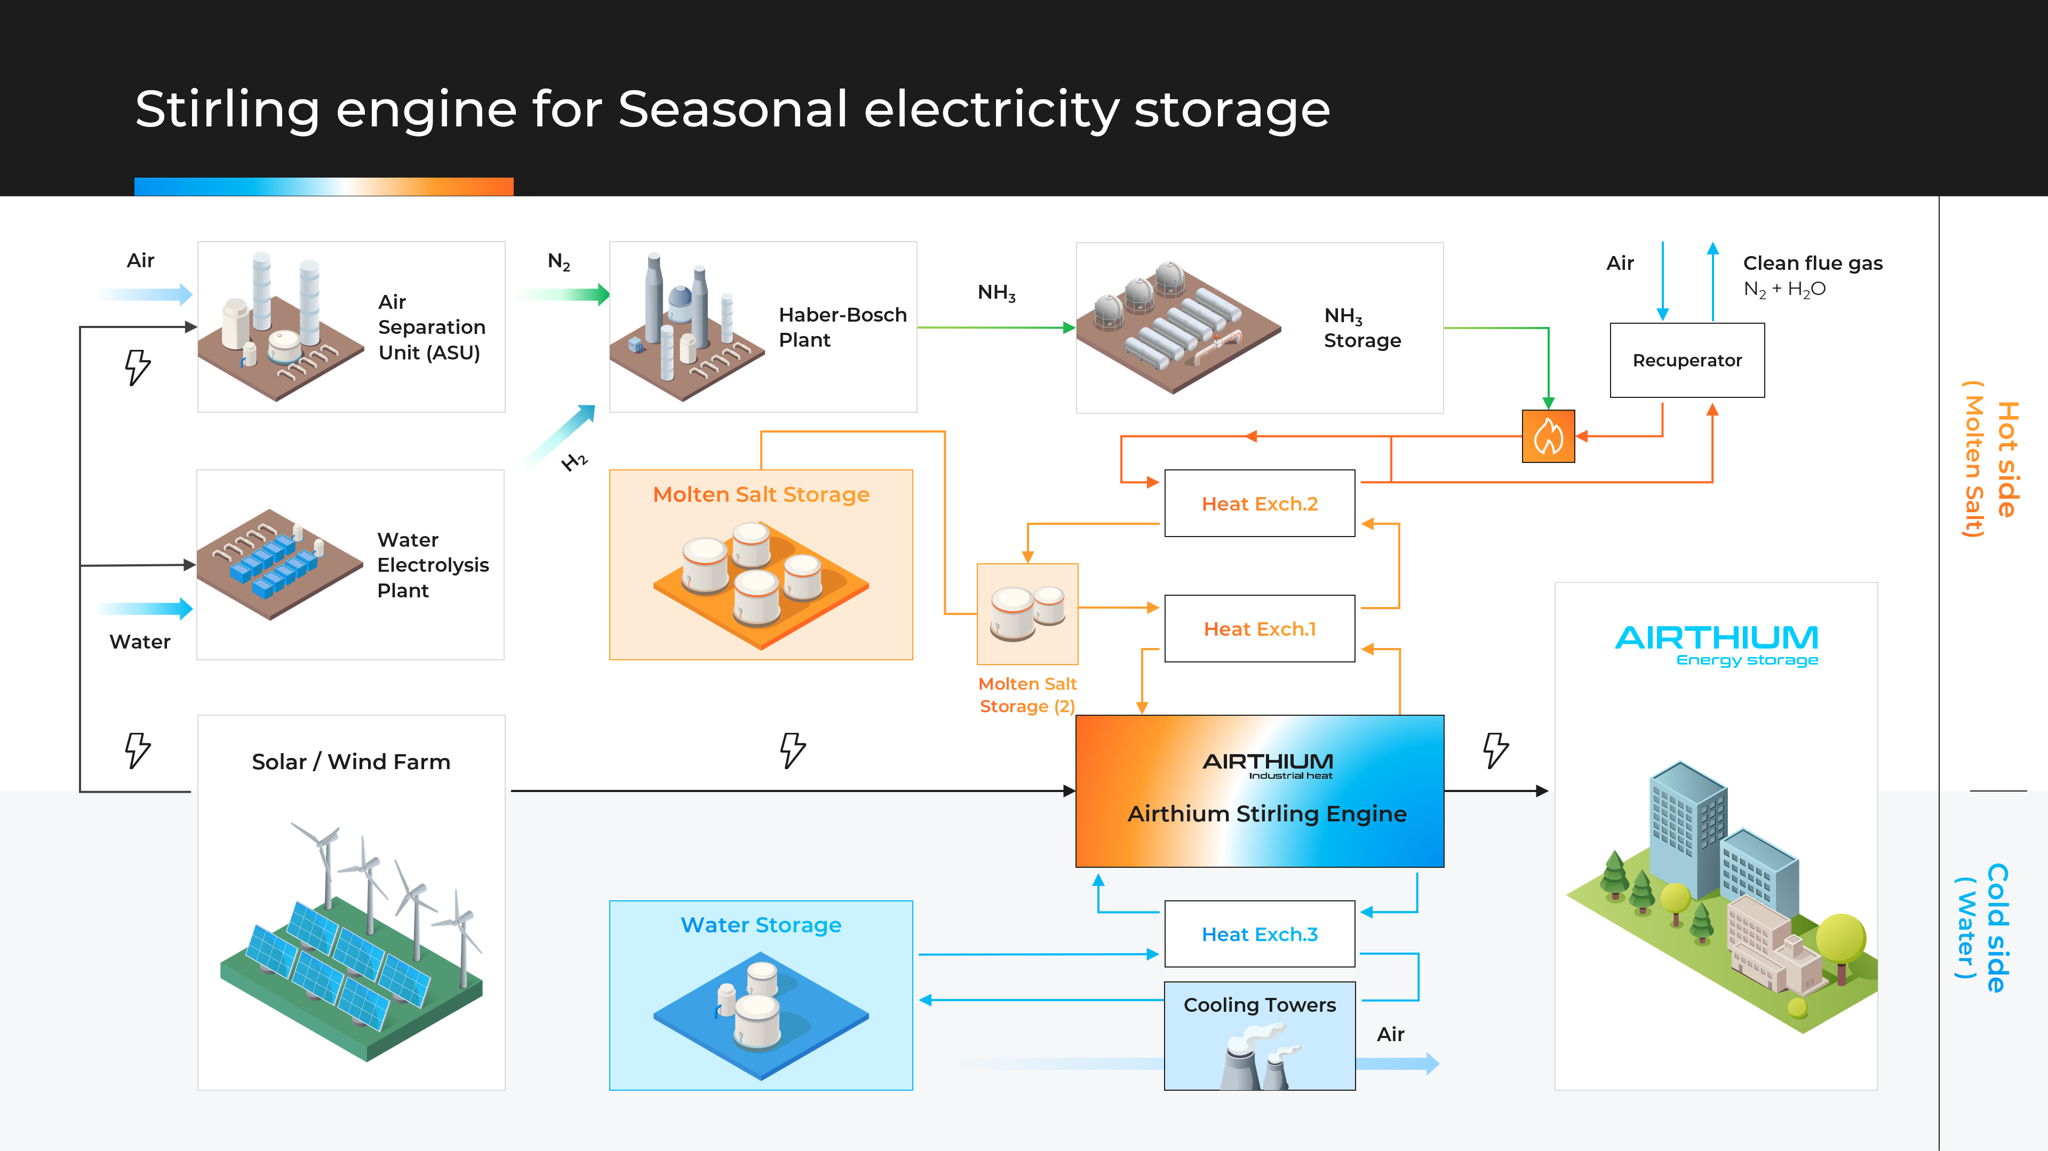 Airthium Seasonal electricity storage system architecture